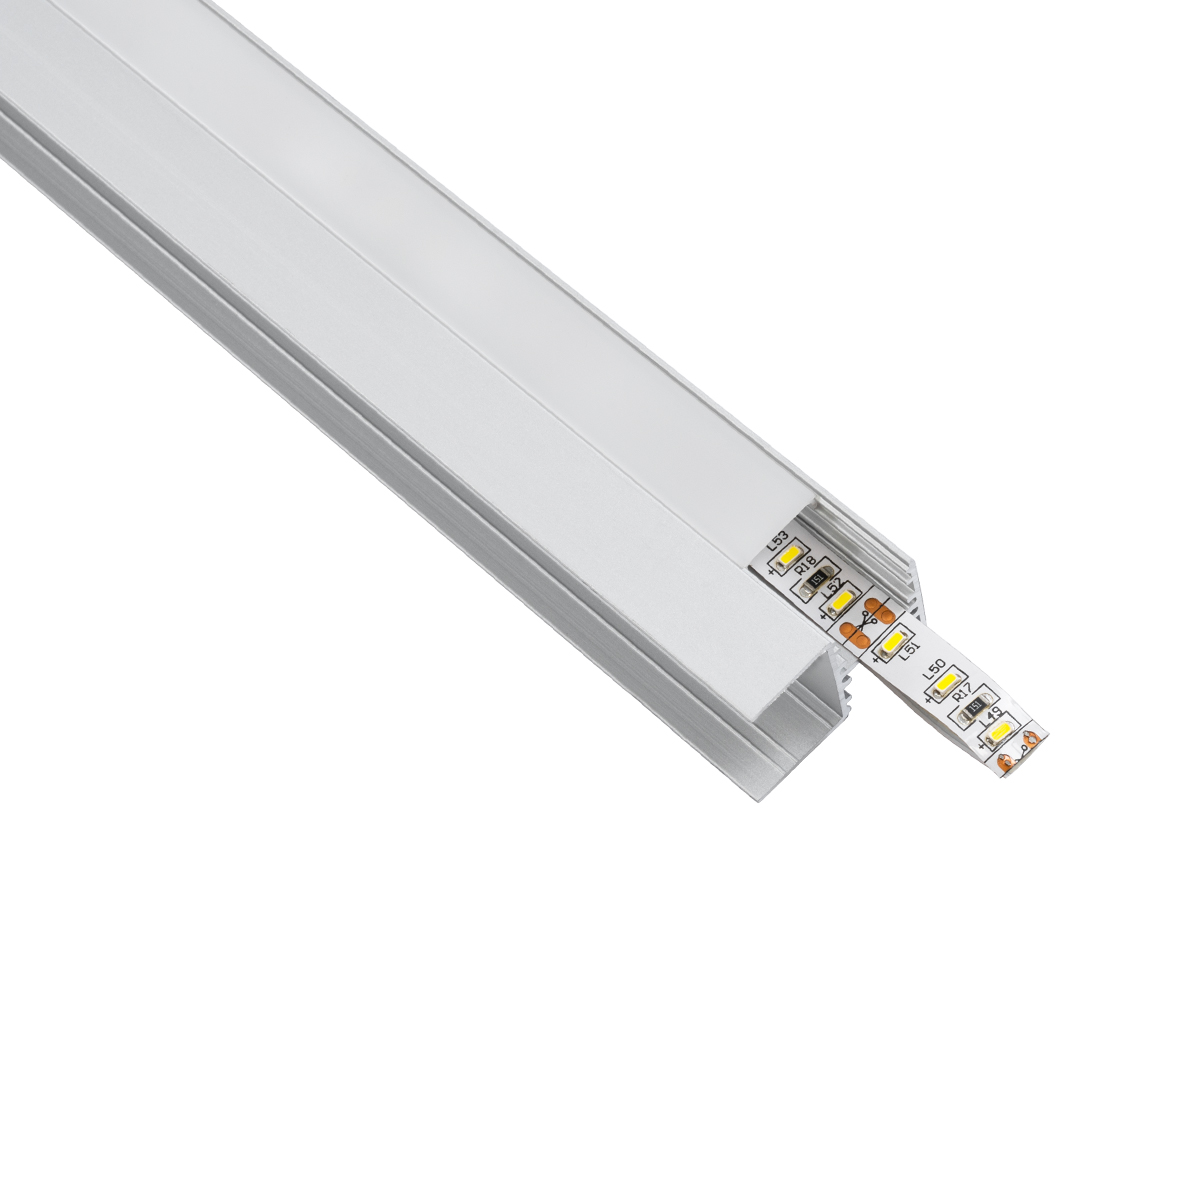 GloboStar® BOARD-PROFILE 70814-3M Προφίλ Αλουμινίου – Βάση & Ψύκτρα Ταινίας LED με Λευκό Γαλακτερό Κάλυμμα – Χρήση για Φωτισμού Ραφιού με Τοποθέτηση σε Ξύλο Πάχους 18mm – Πατητό Κάλυμμα – Ασημί – 3 Μέτρα – Πακέτο 5 Τεμαχίων – Μ300 x Π1.5 x Υ2cm